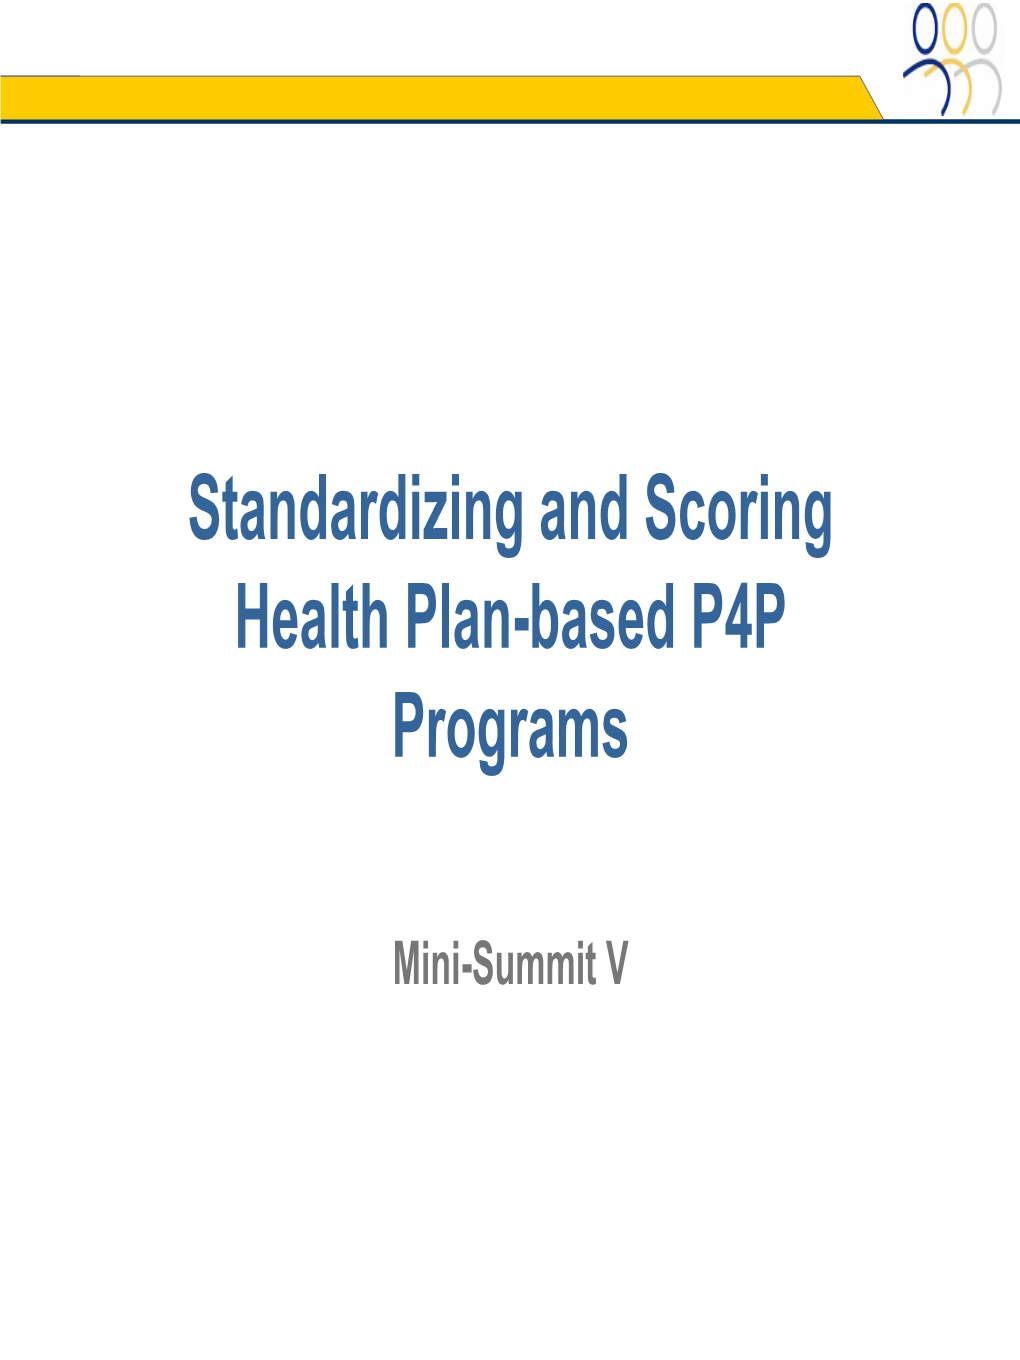 Standardizing and Scoring Health Plan-Based P4P Programs